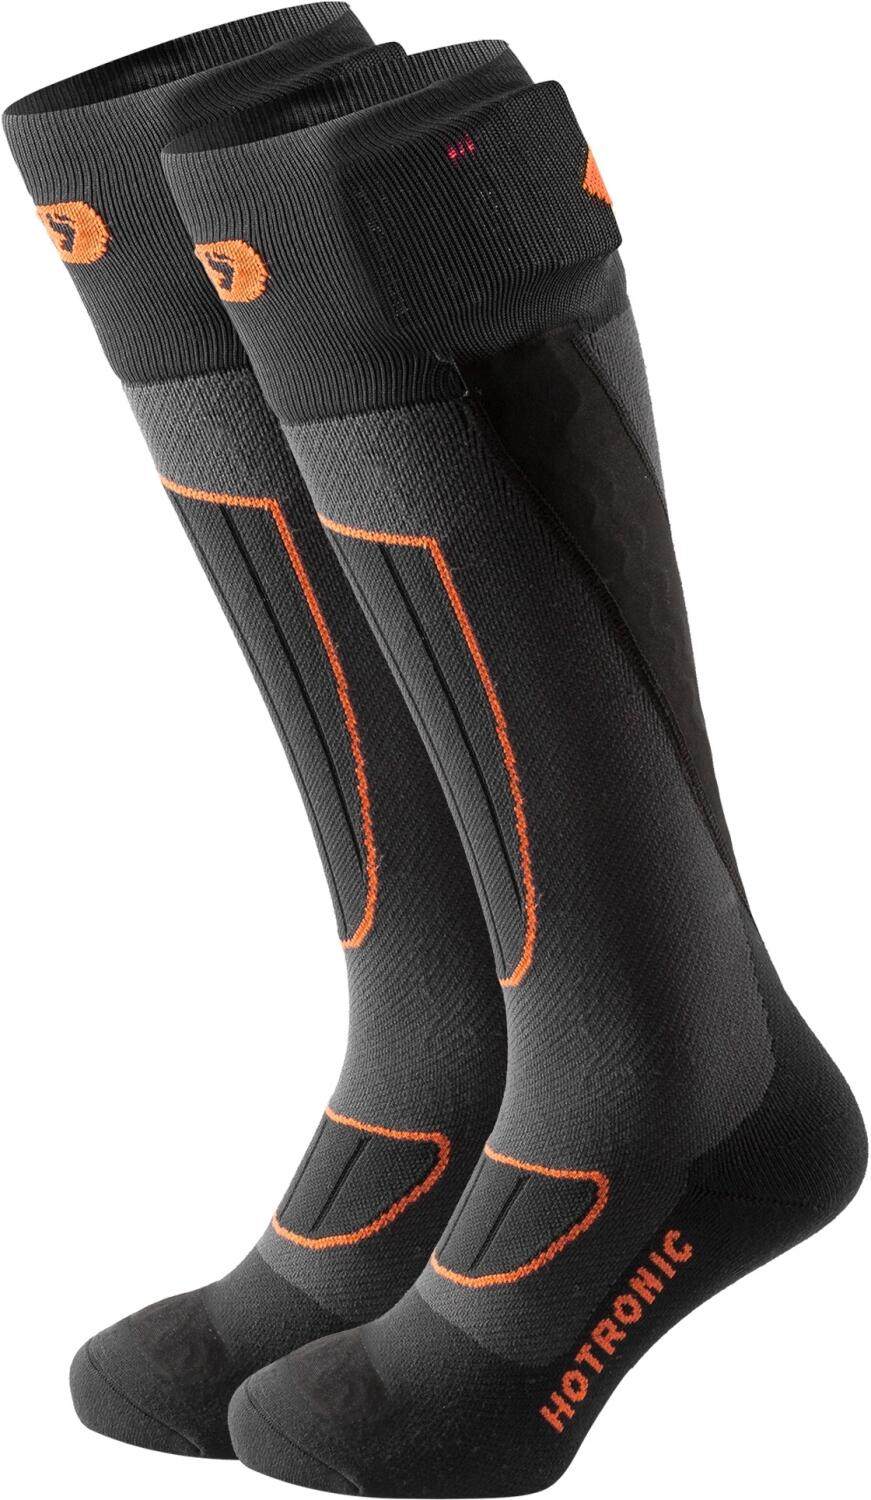 Hotronic Heat Socks Surround Comfort (42.0 - 44.0, anthrazit/orange, 1 Paar) von Hotronic